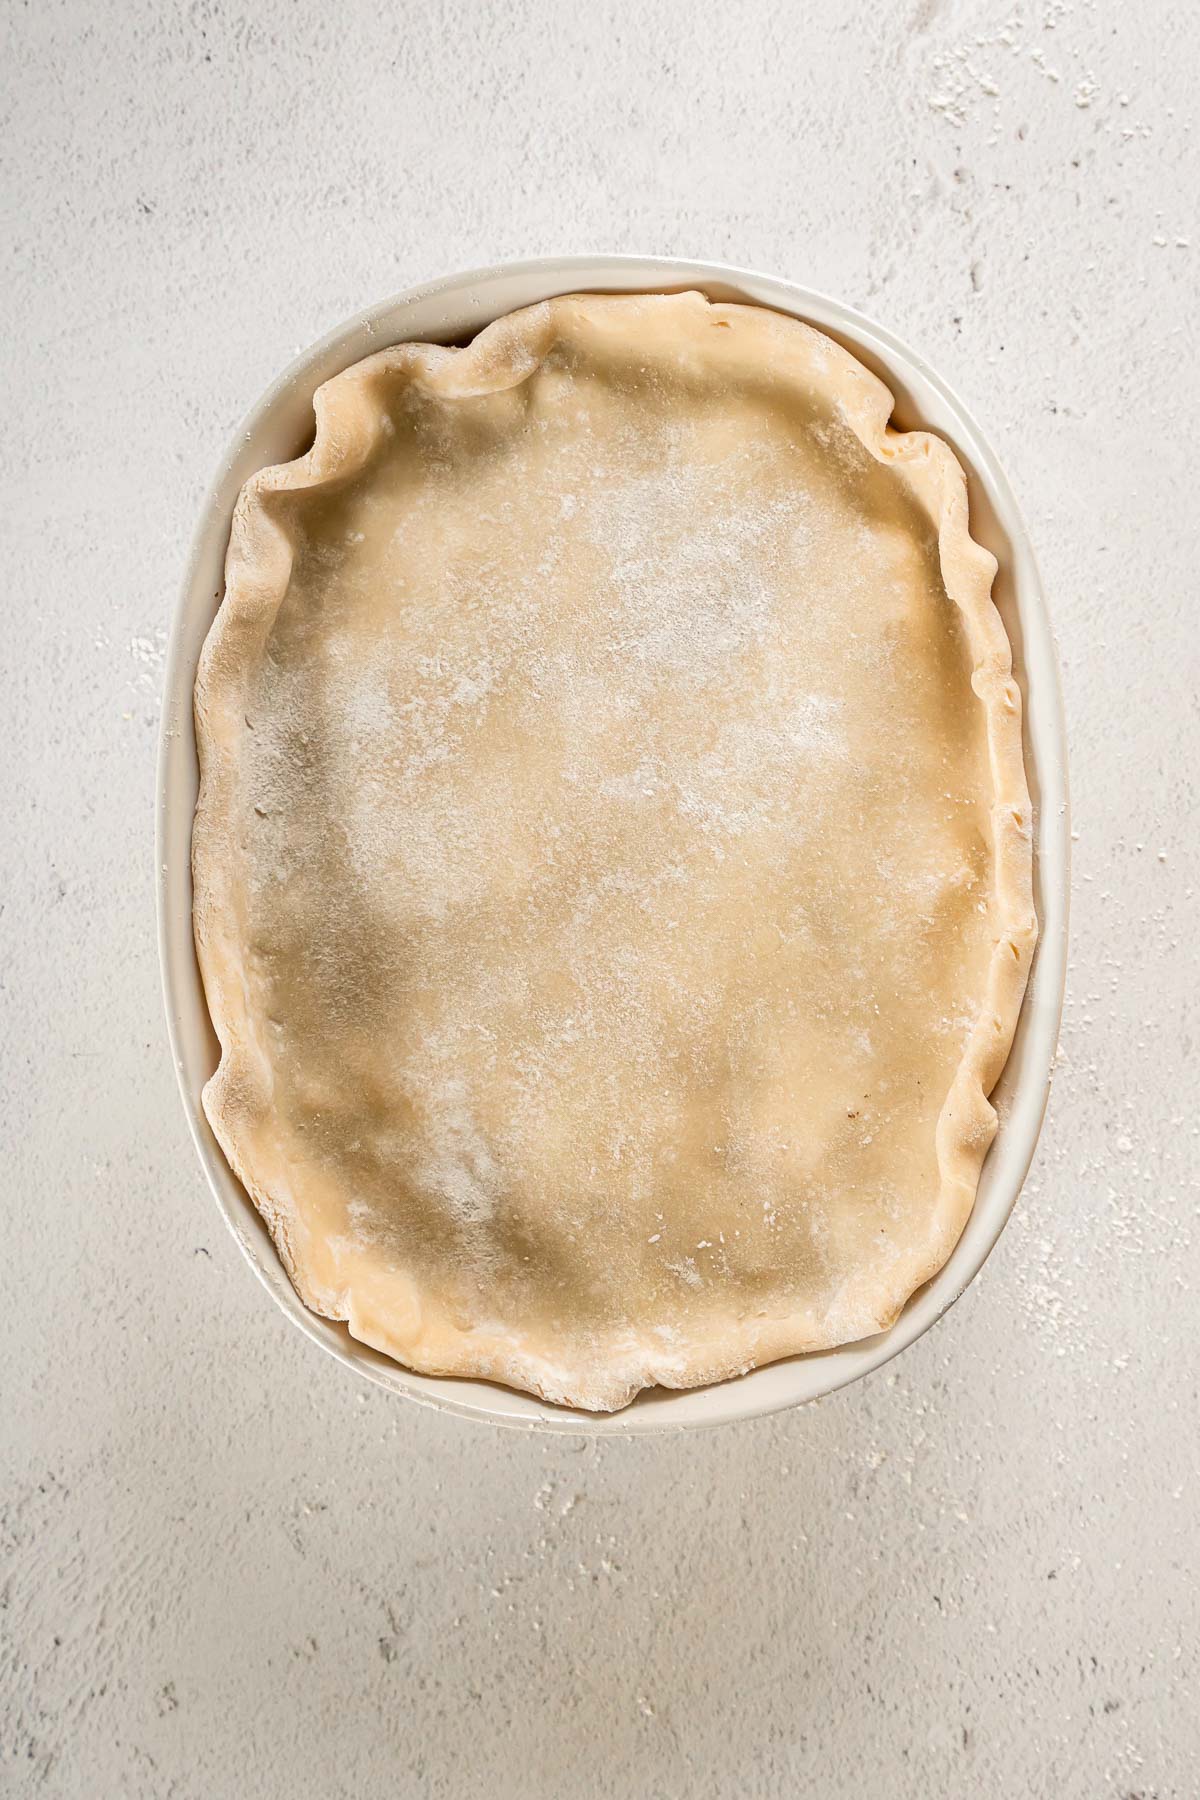 Pie crust shaped into an oval casserole dish.